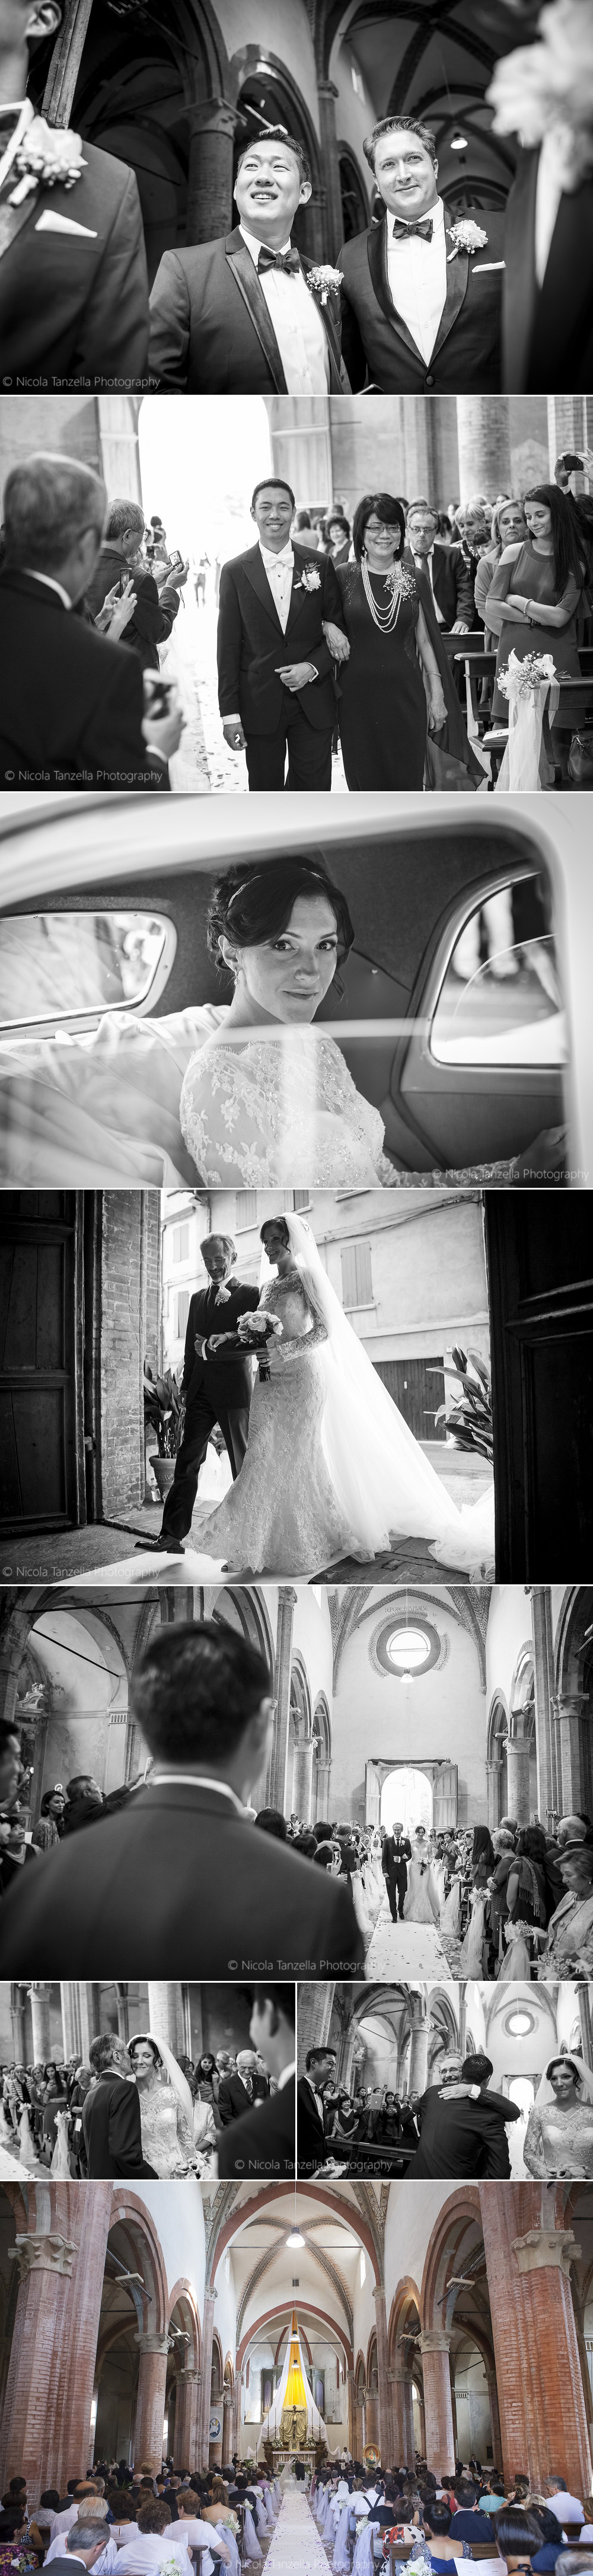 fotografo matrimonio modena -004